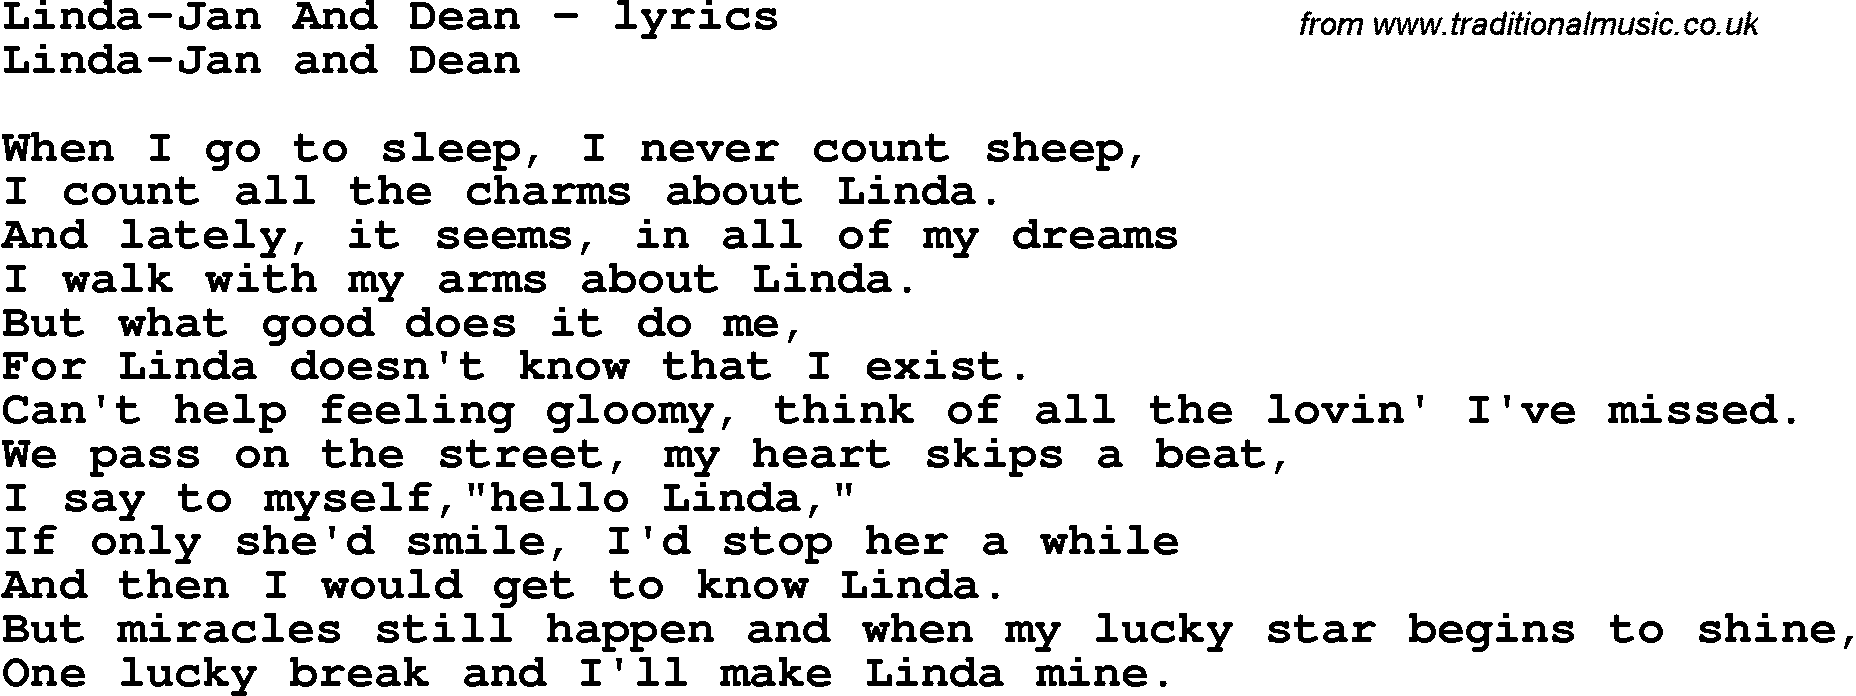 Love Song Lyrics for: Linda-Jan And Dean